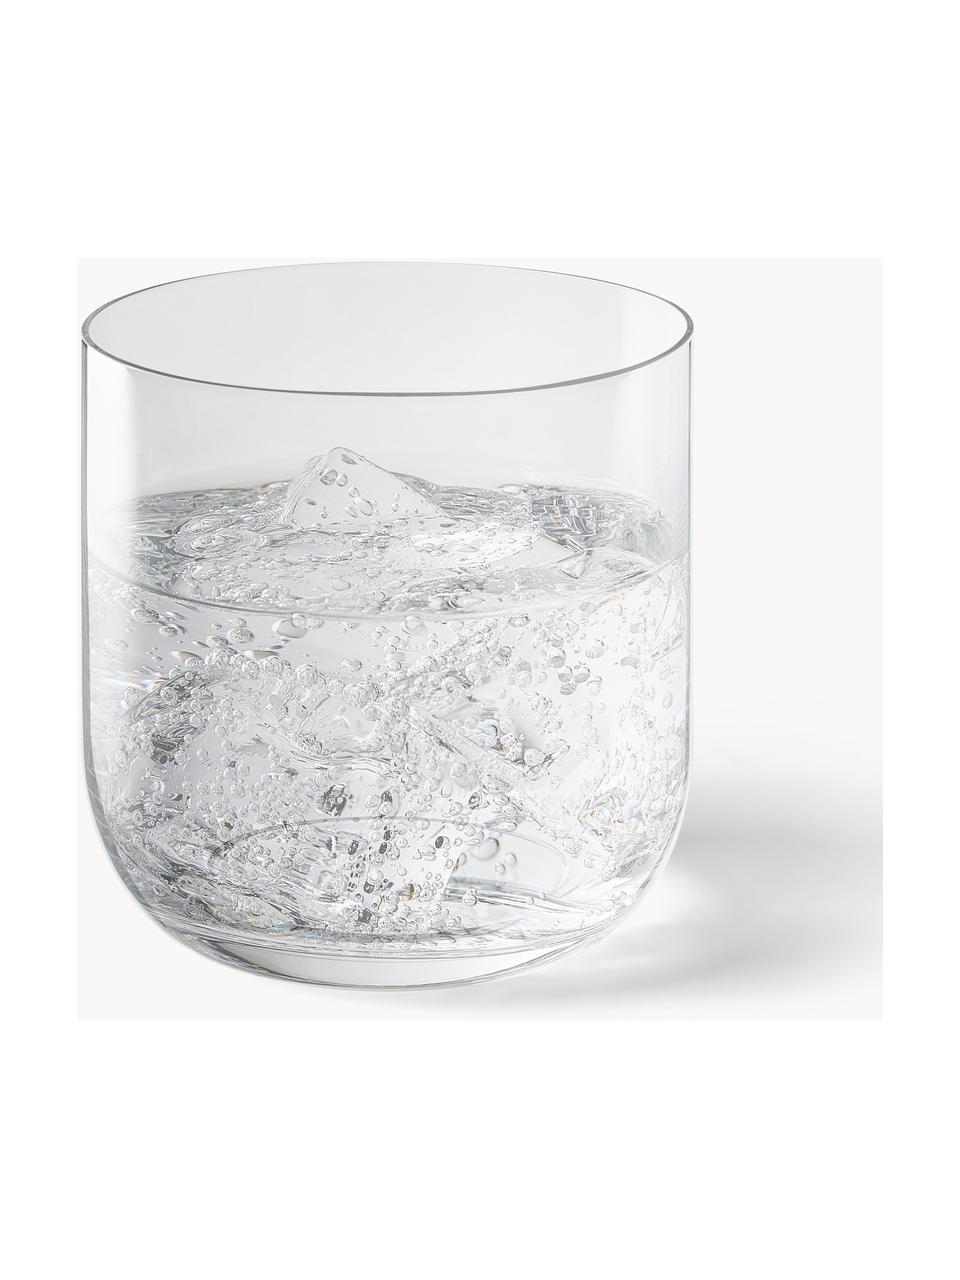 Bicchieri Eleia 4 pz, Cristallo, Trasparente, Ø 7 x Alt. 9 cm, 330 ml